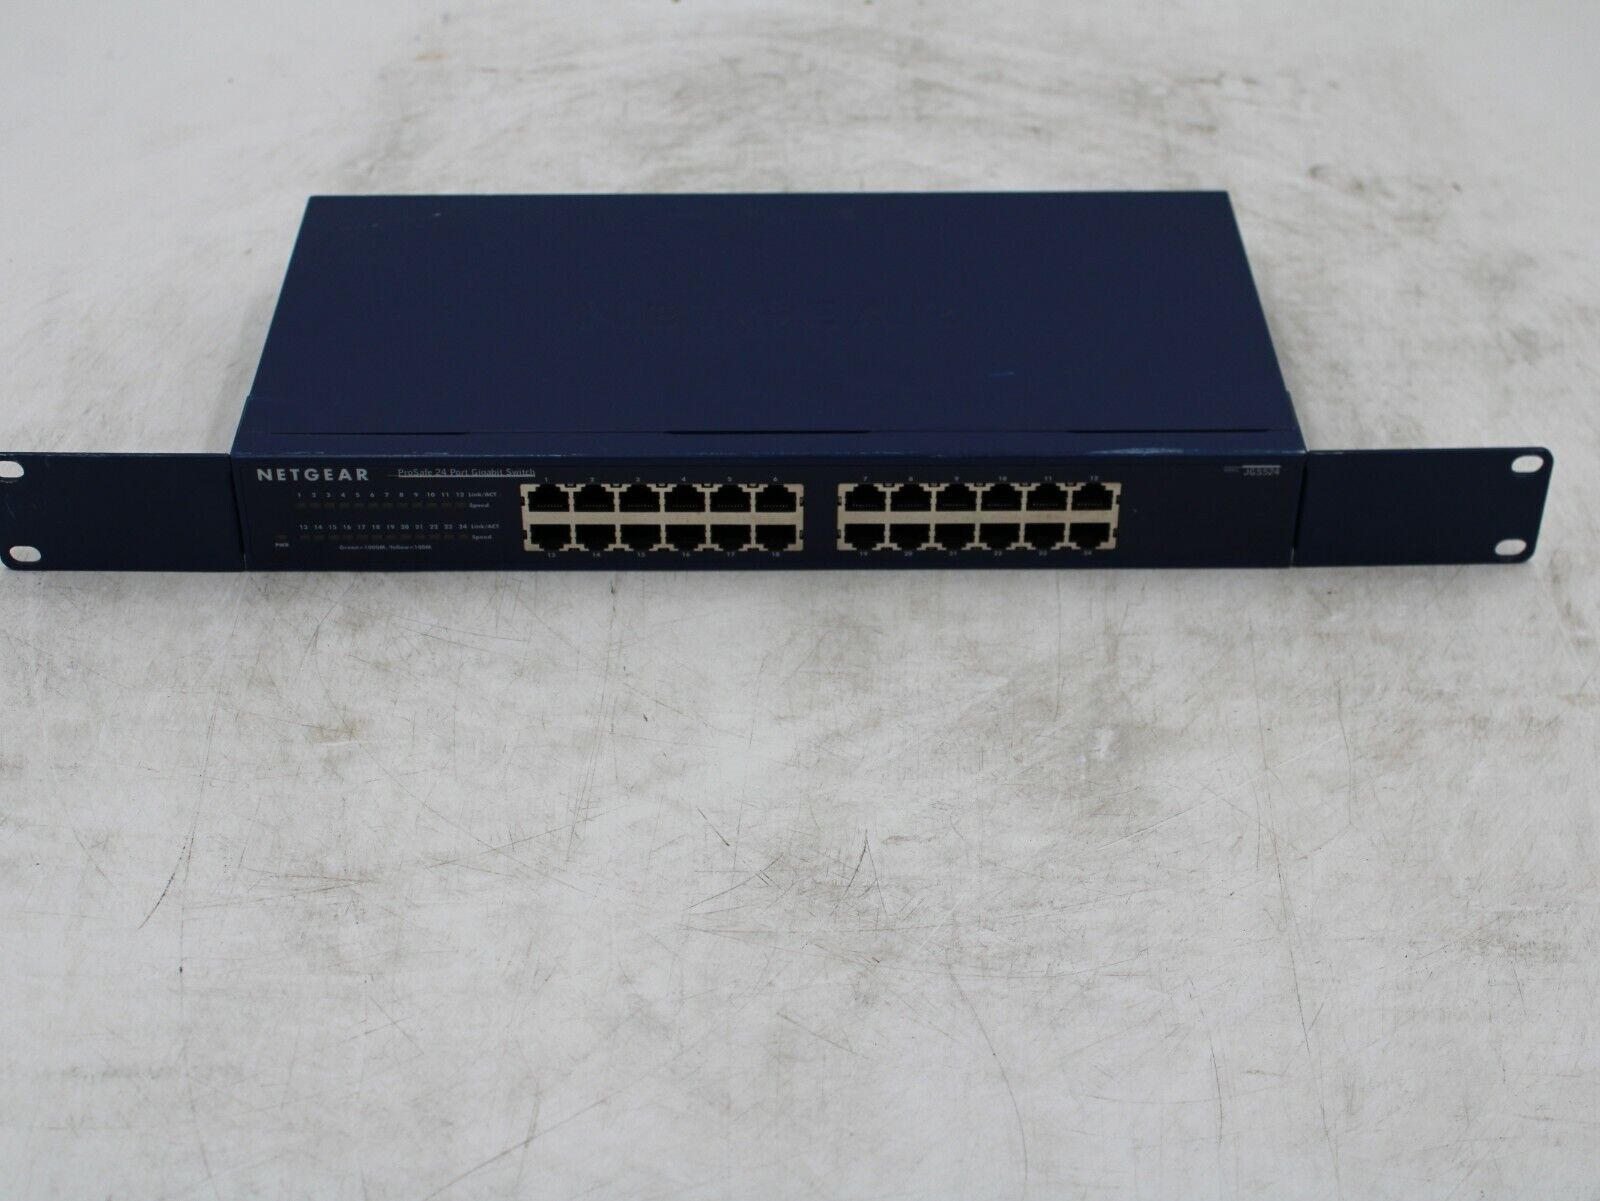 Netgear Prosafe JGS524 24 Port Gigabit Ethernet Network Switch TESTED